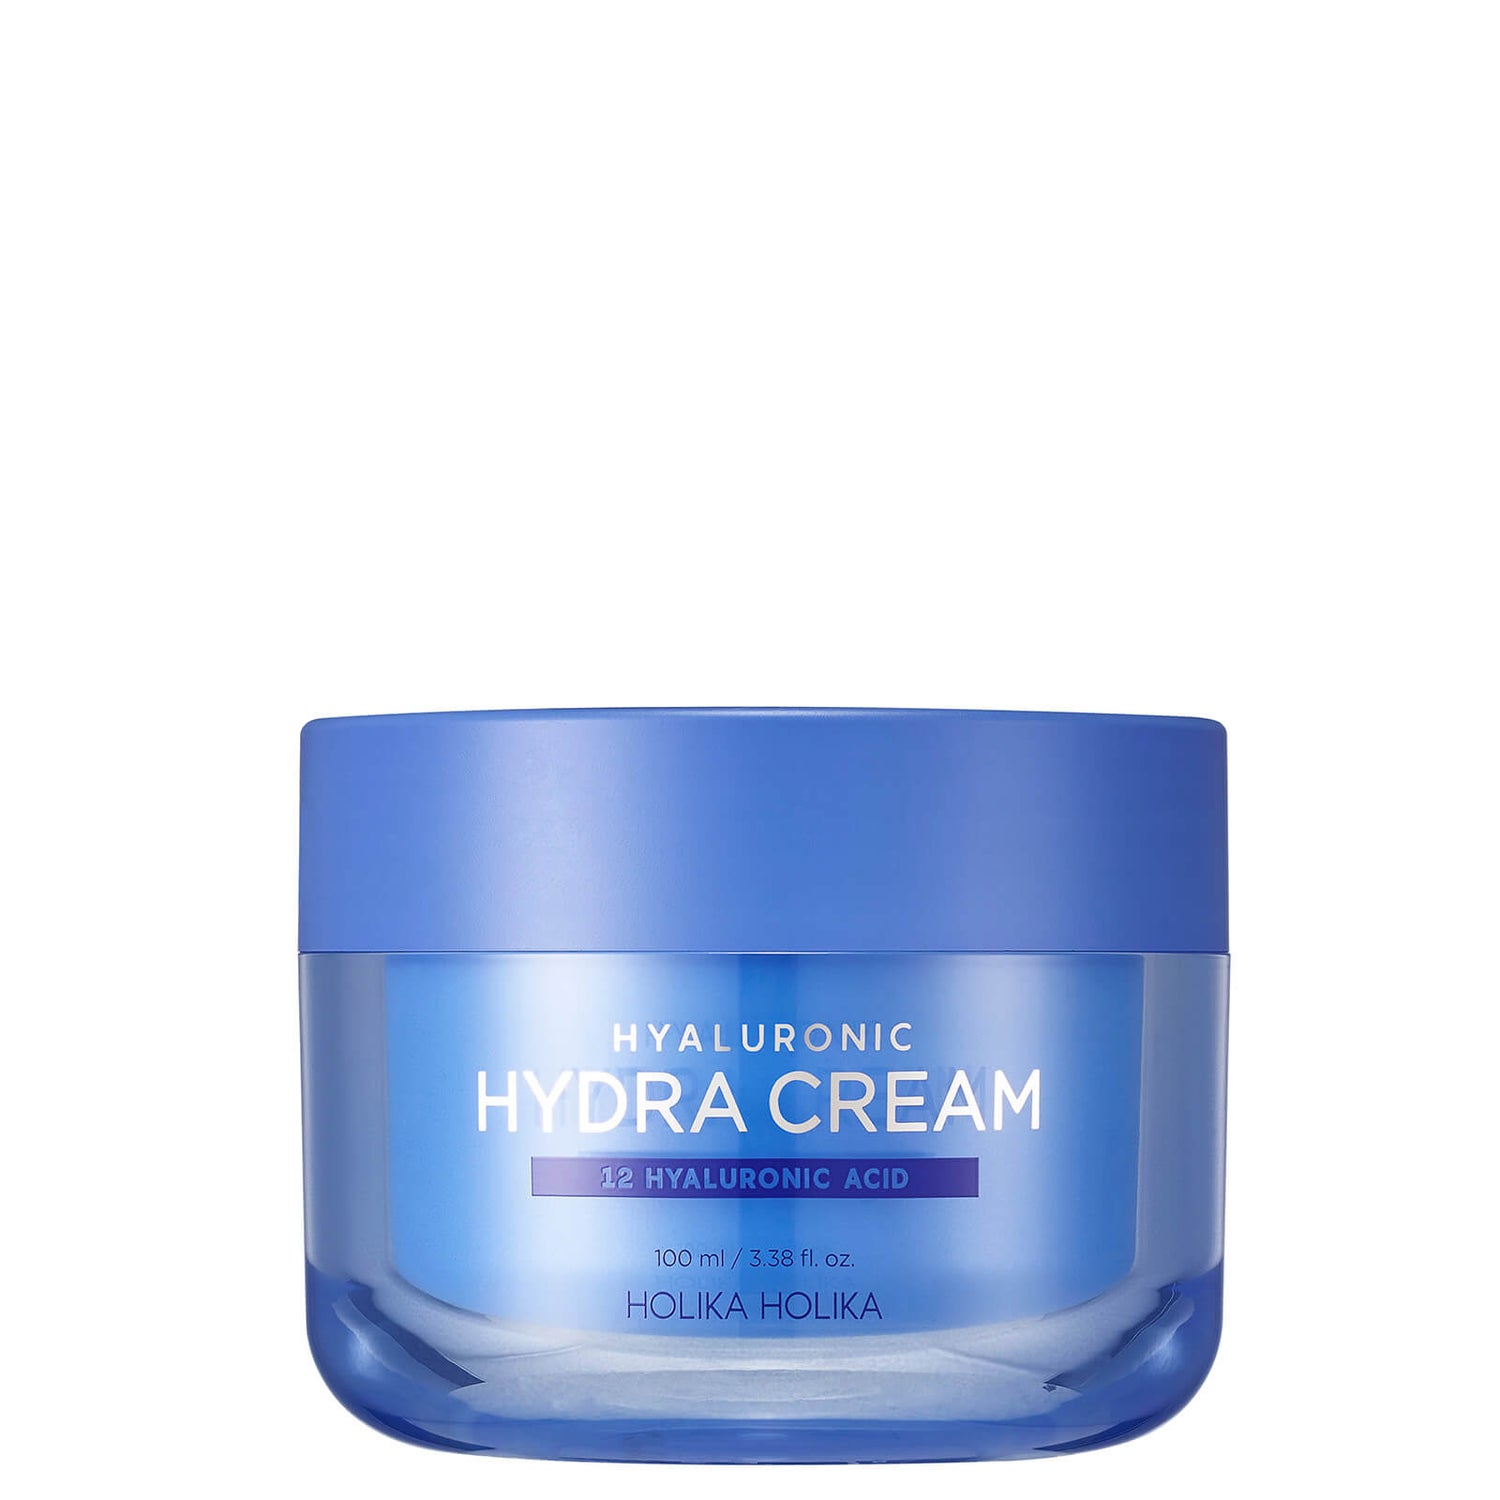 Крем для лица с гиалуроновой кислотой Holika Holika Hyaluronic Hydra Cream, 100 мл